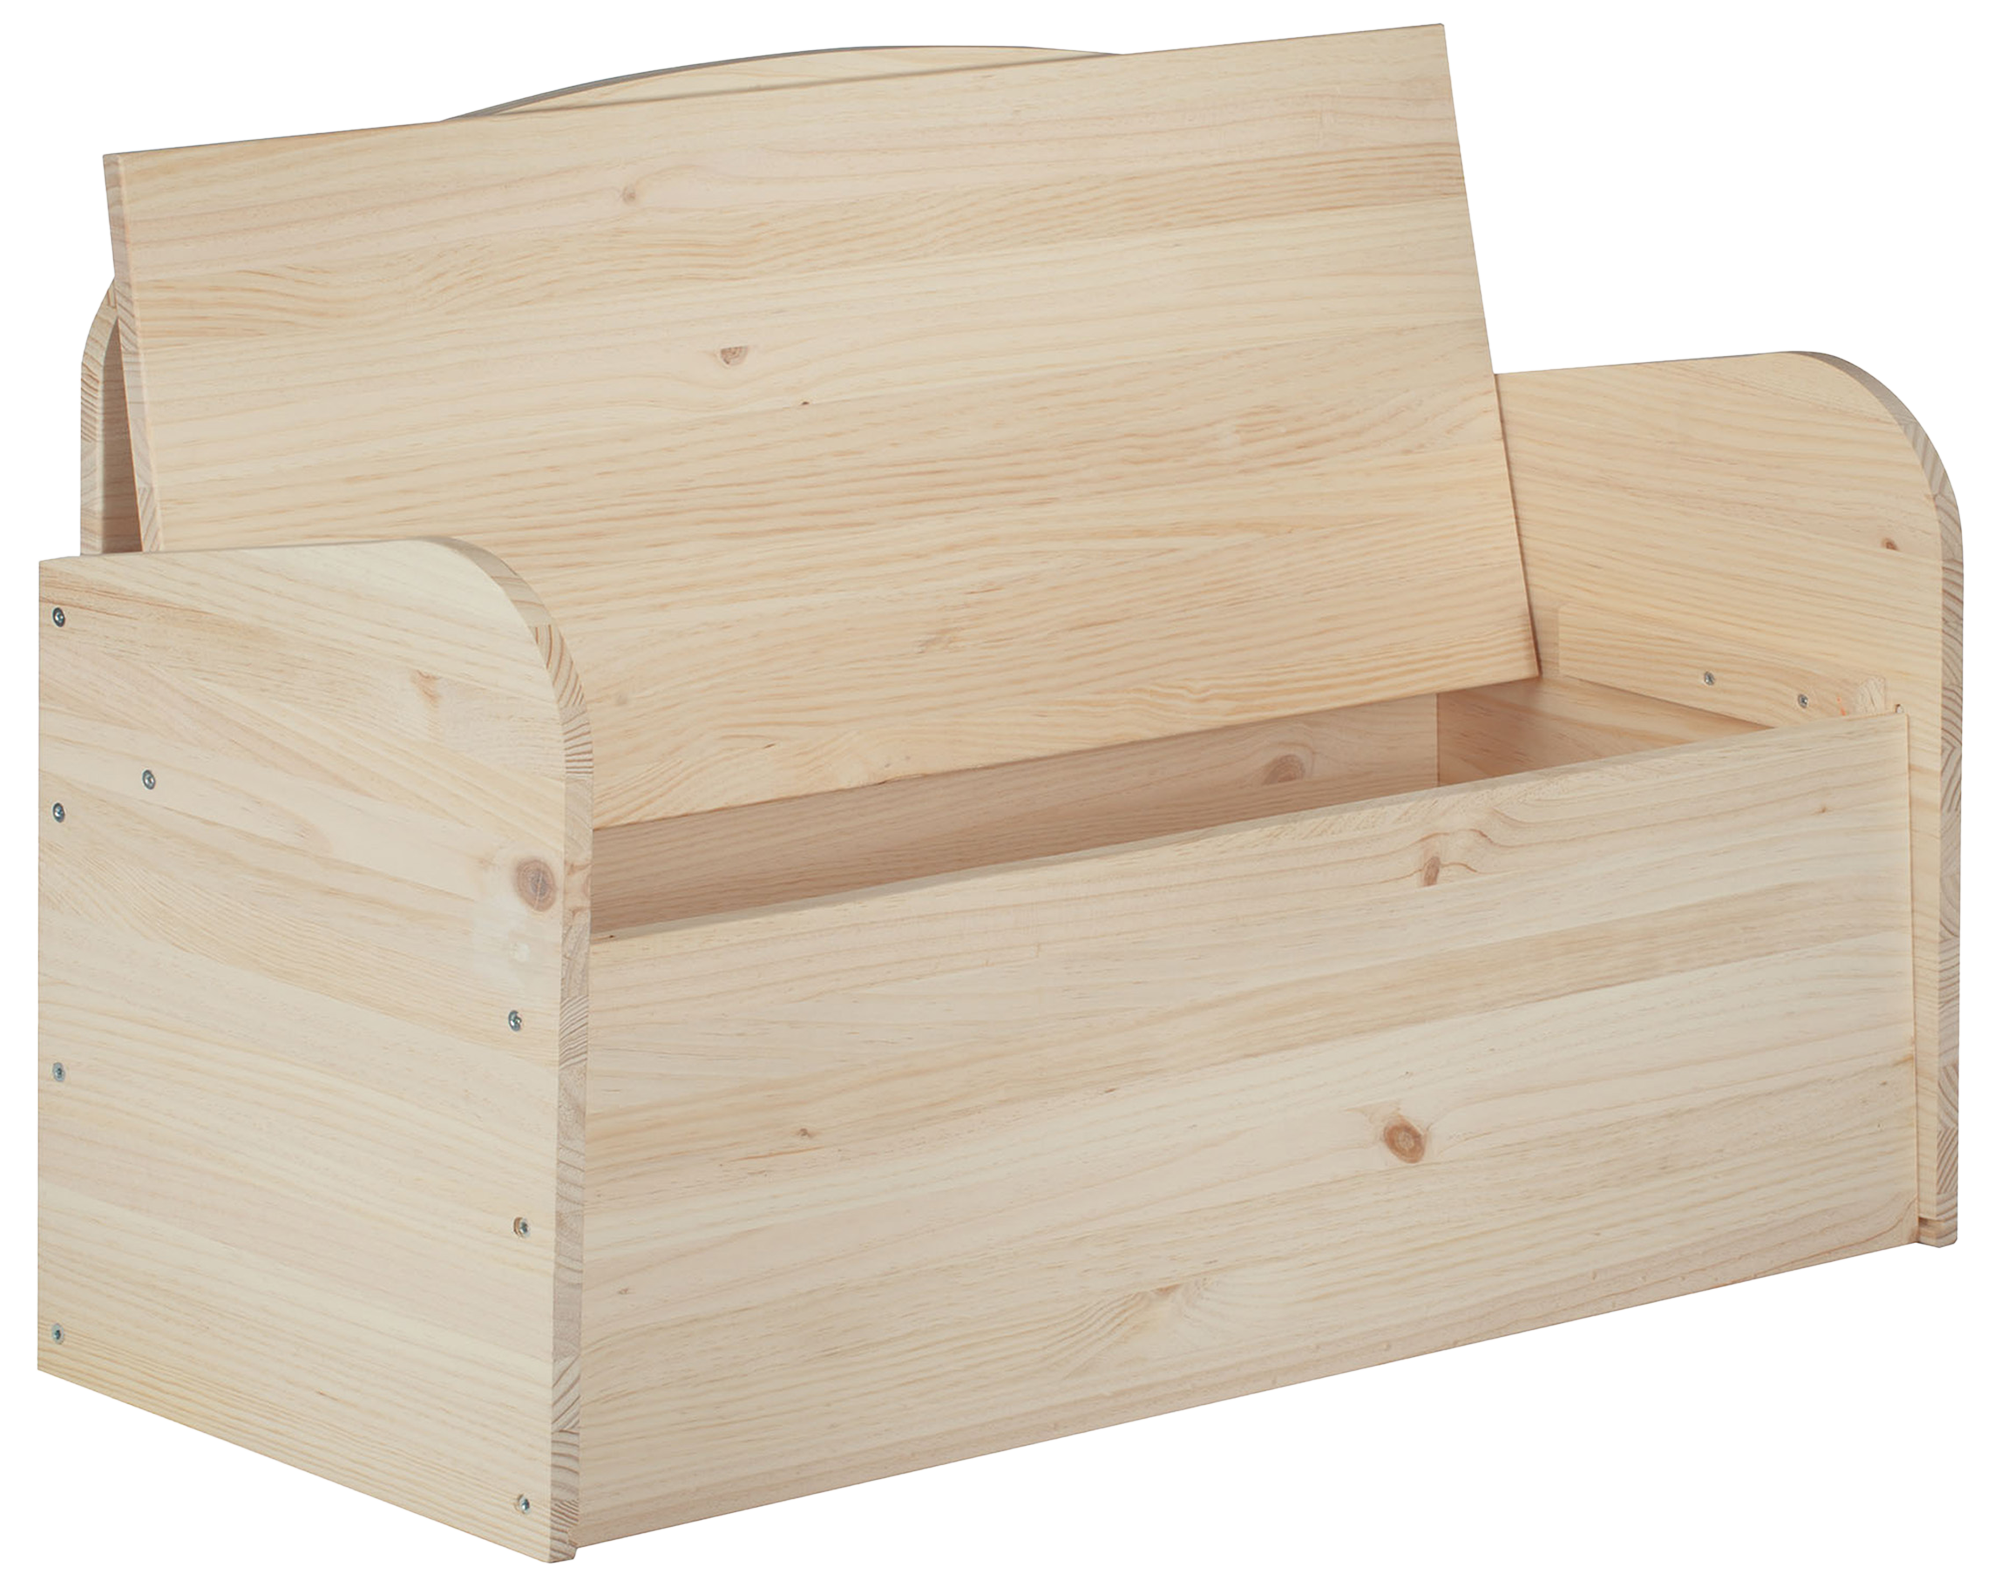 Baúl de madera de 62x90x38 cm y capacidad de 78l